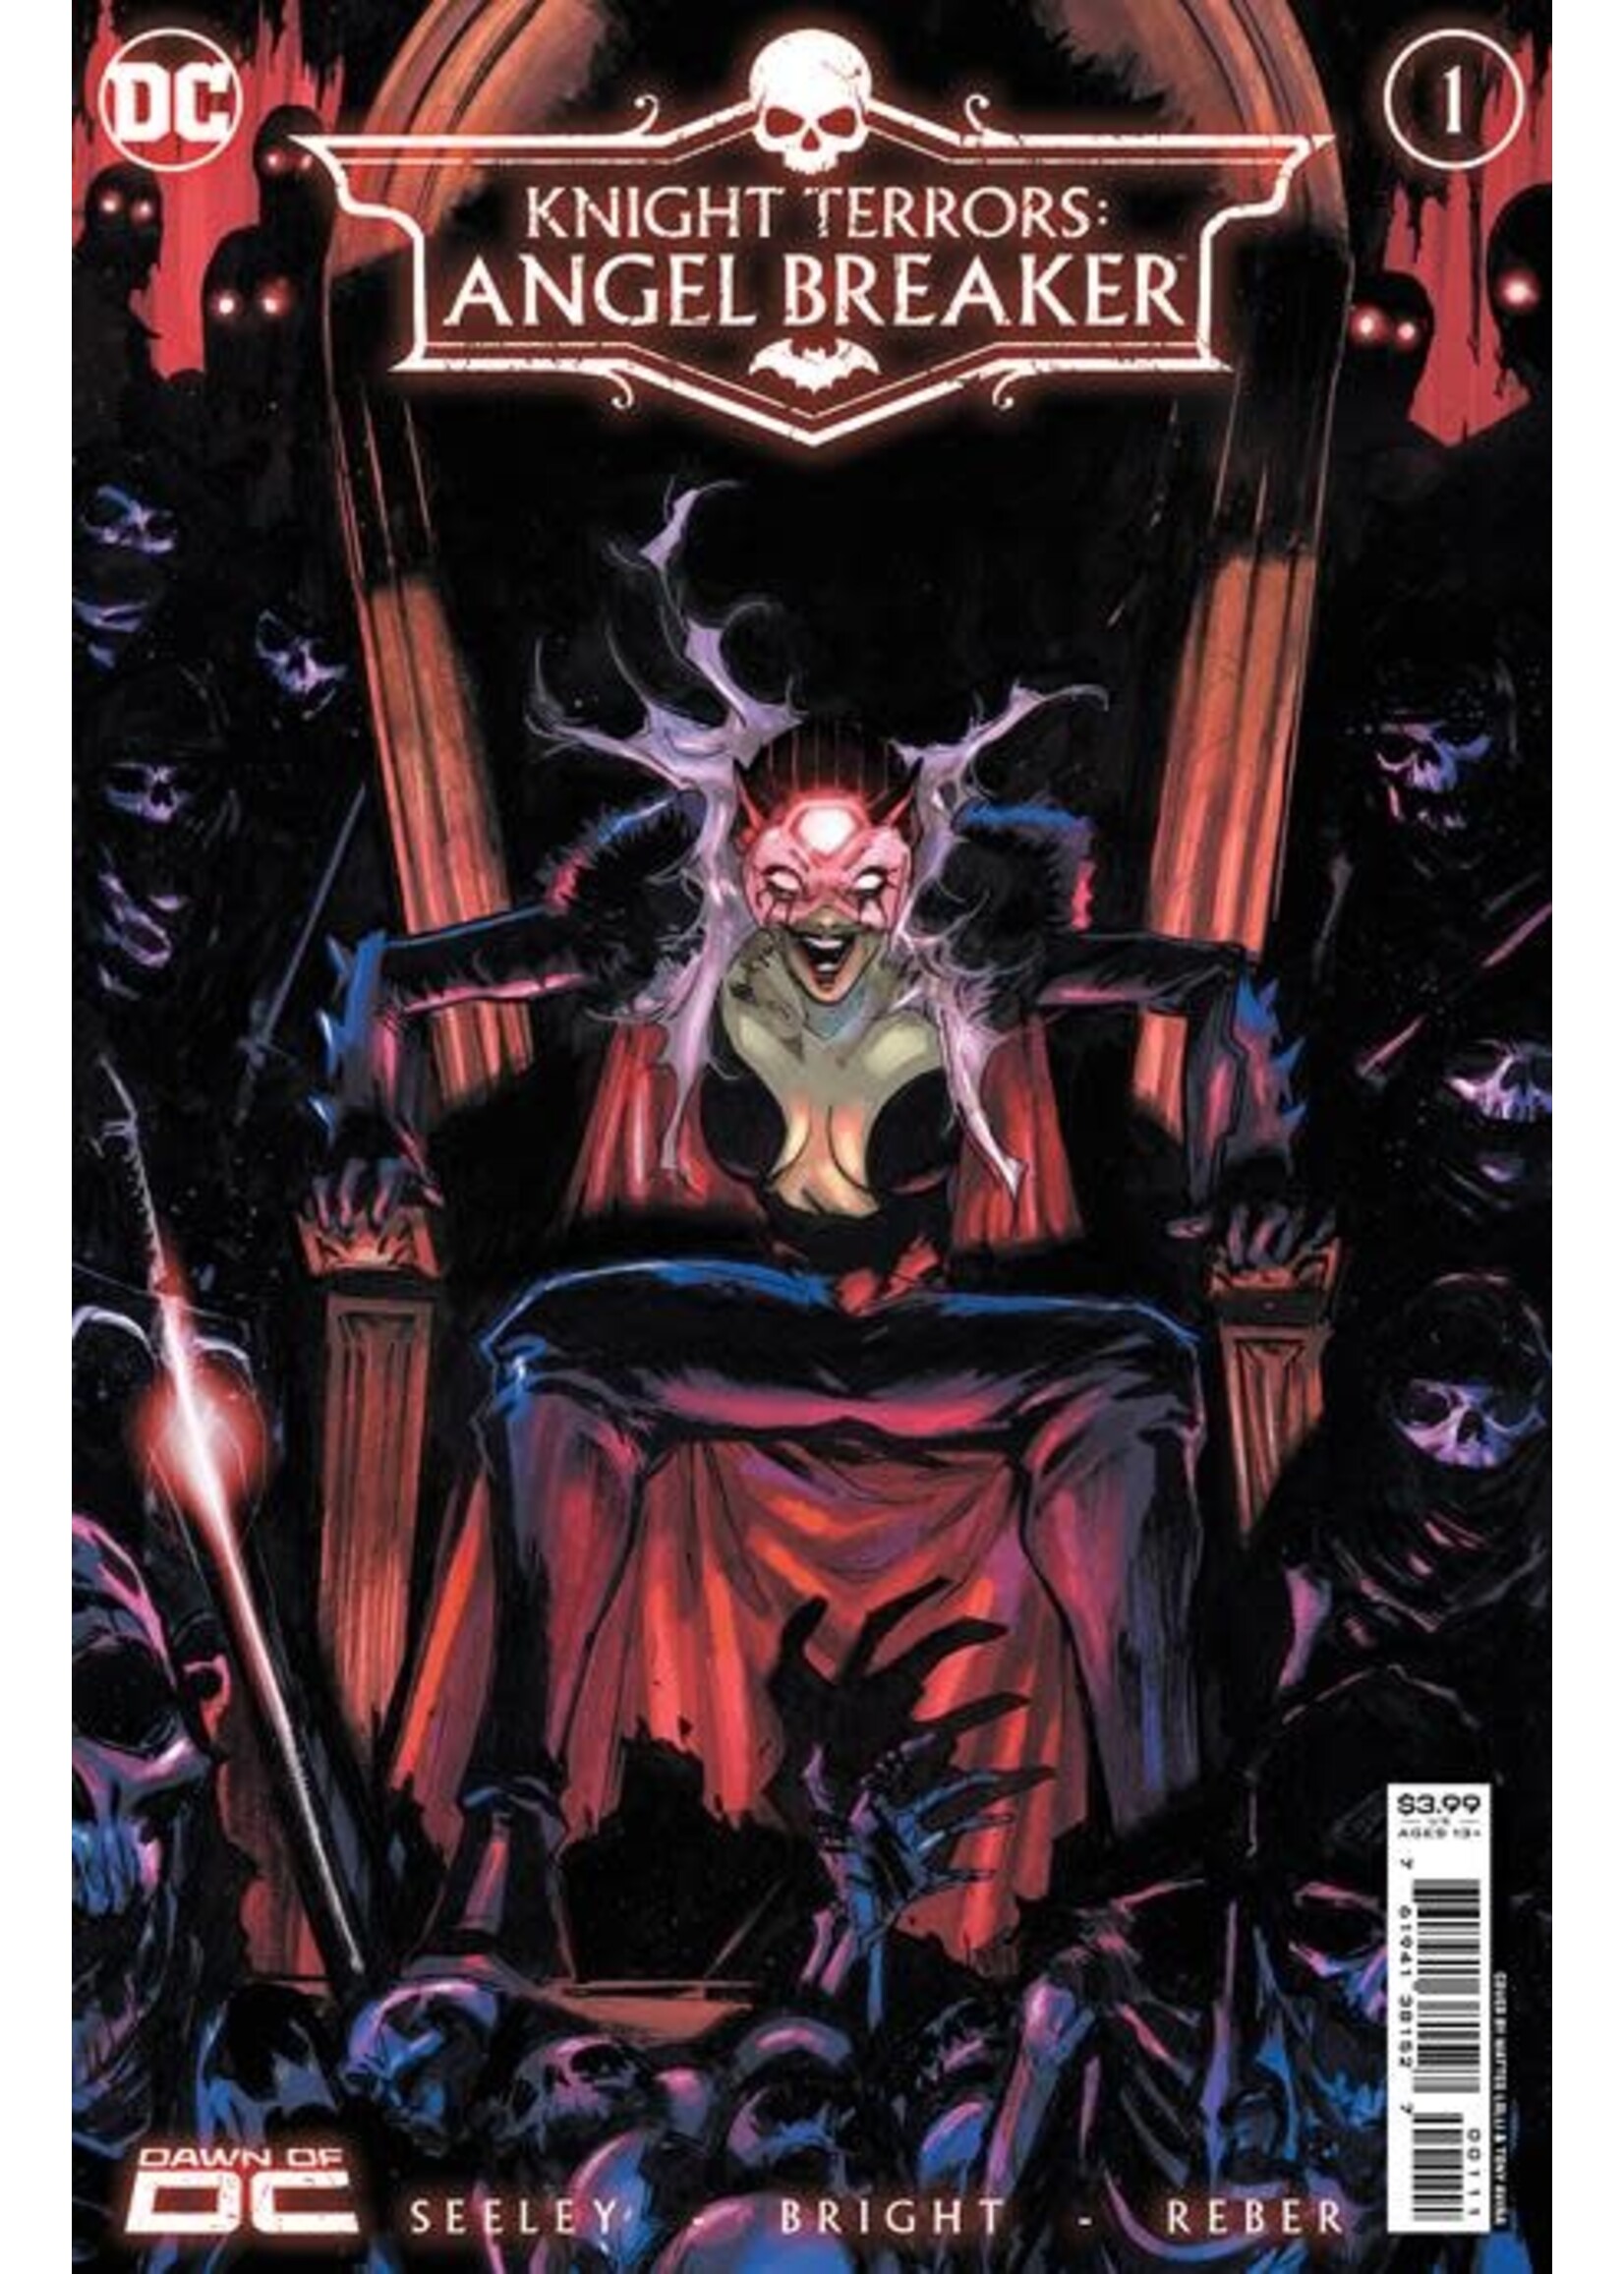 DC COMICS KNIGHT TERRORS ANGEL BREAKER #1